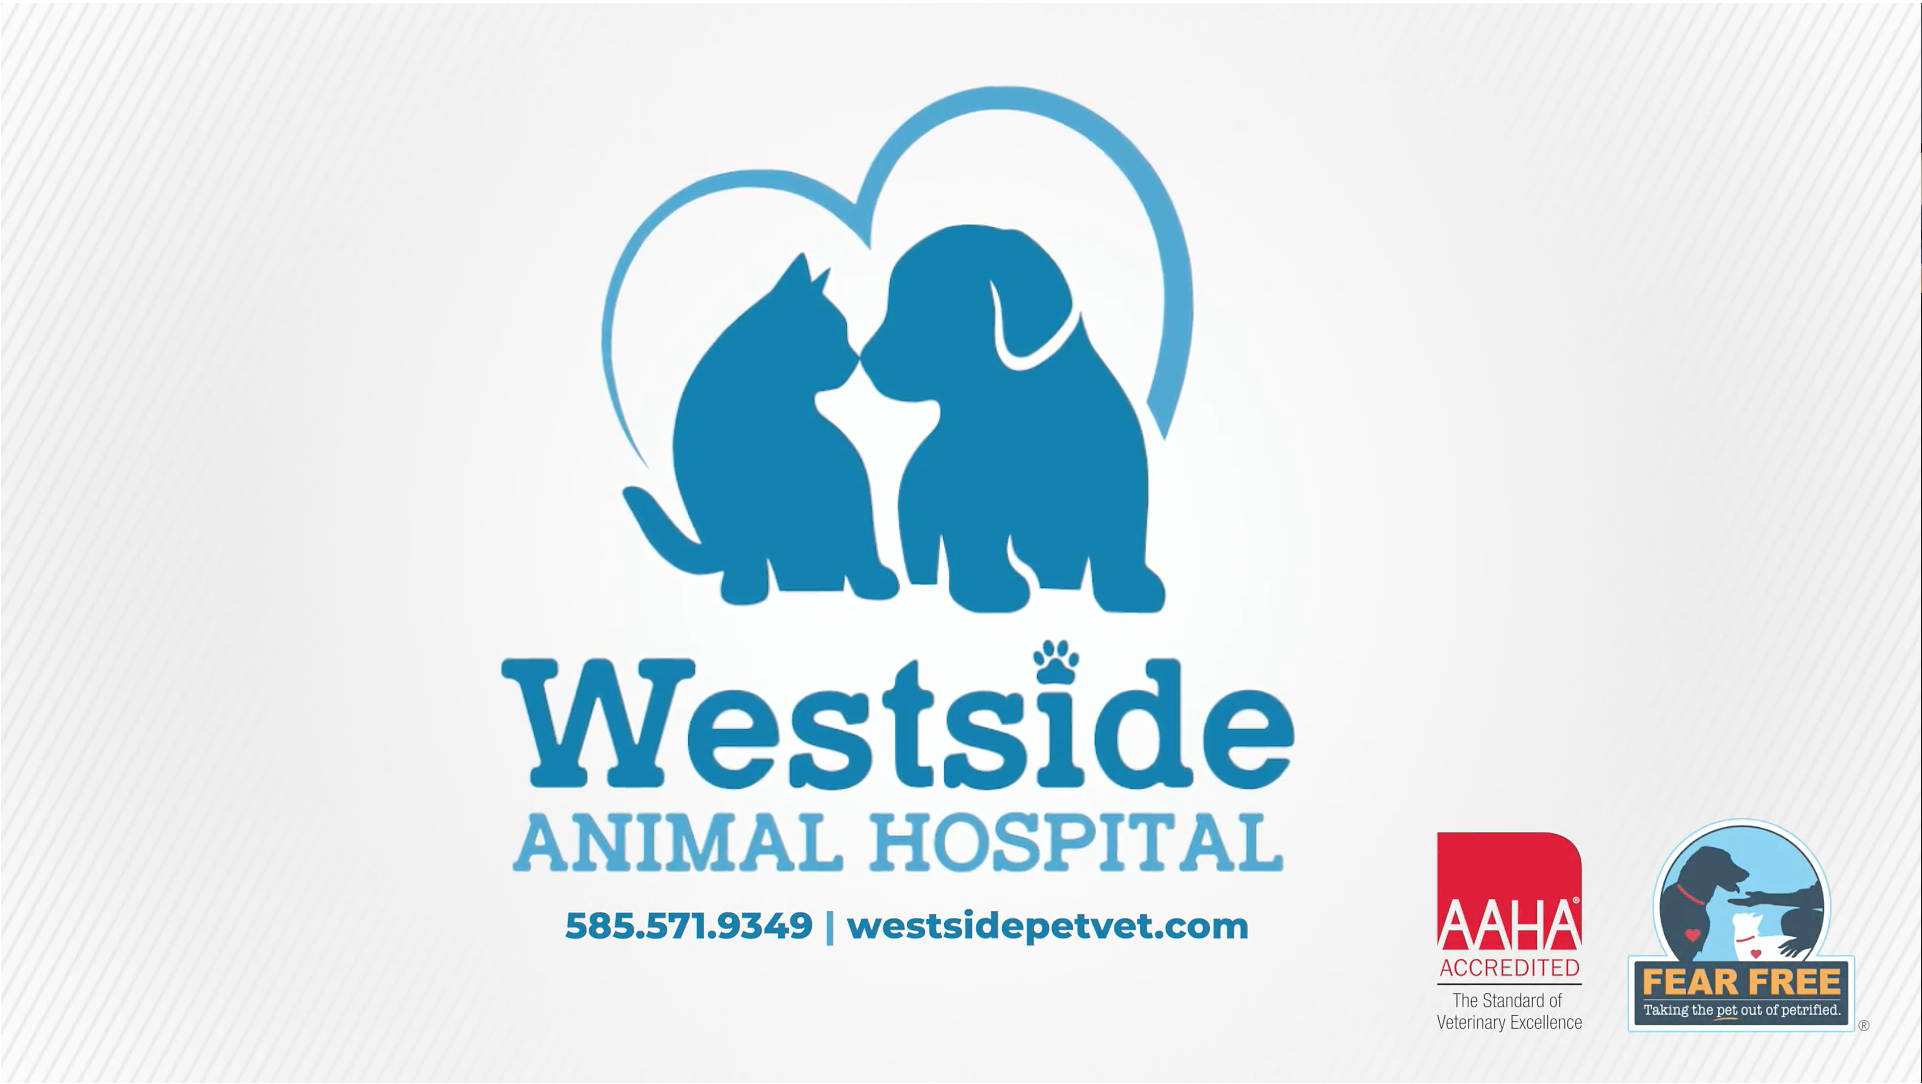 Westside Animal Hospital